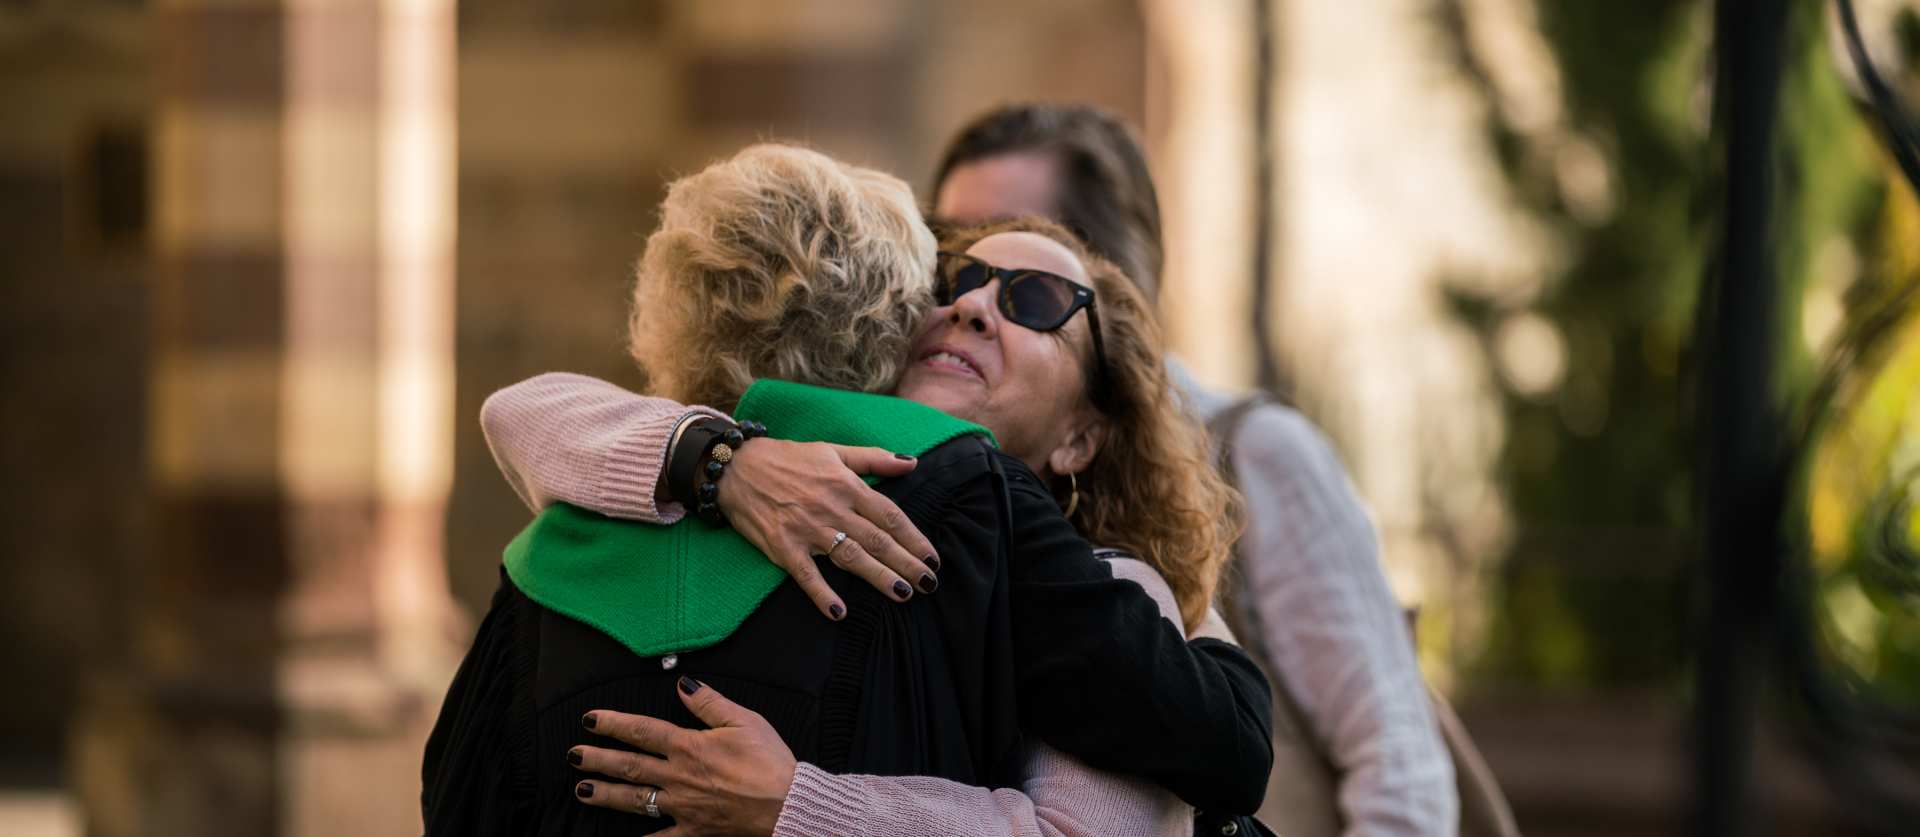 Pastor Nancy hugging a member